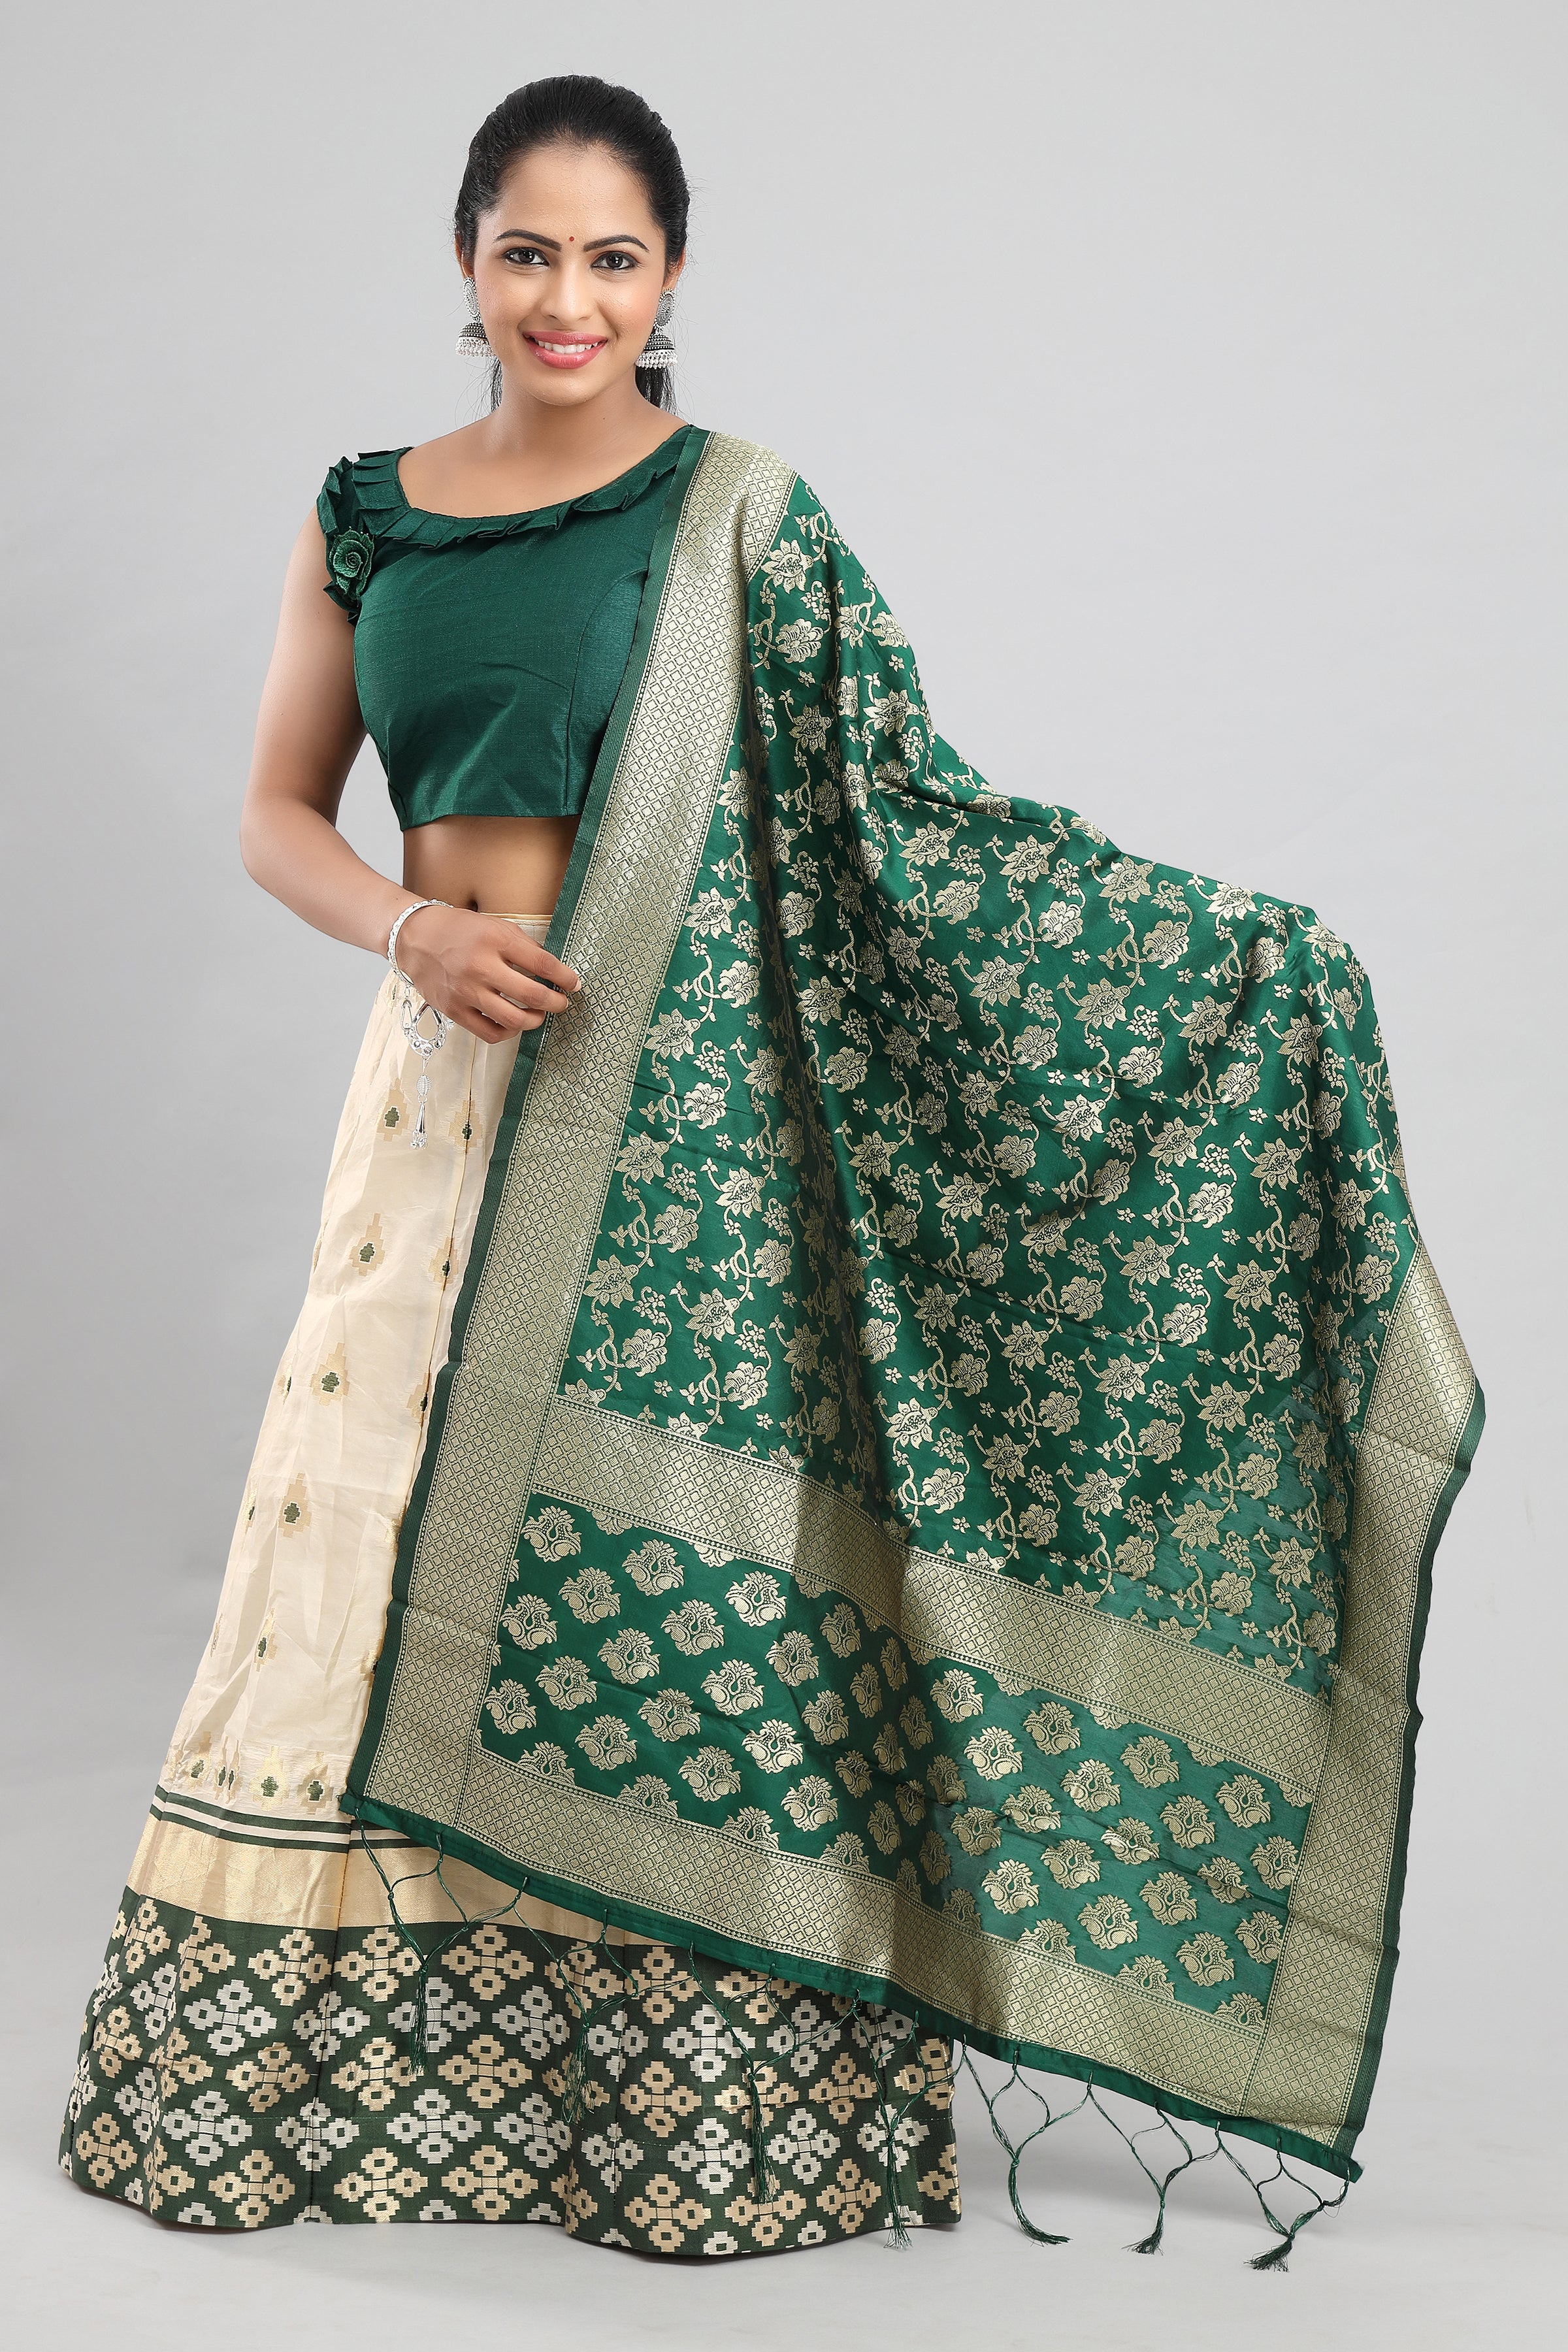 Women's Banarasi  White And Green Brocade Lehenga With Ready Made Blouse, Brocade Dupatta, Cane And Lining. - MANOHARA